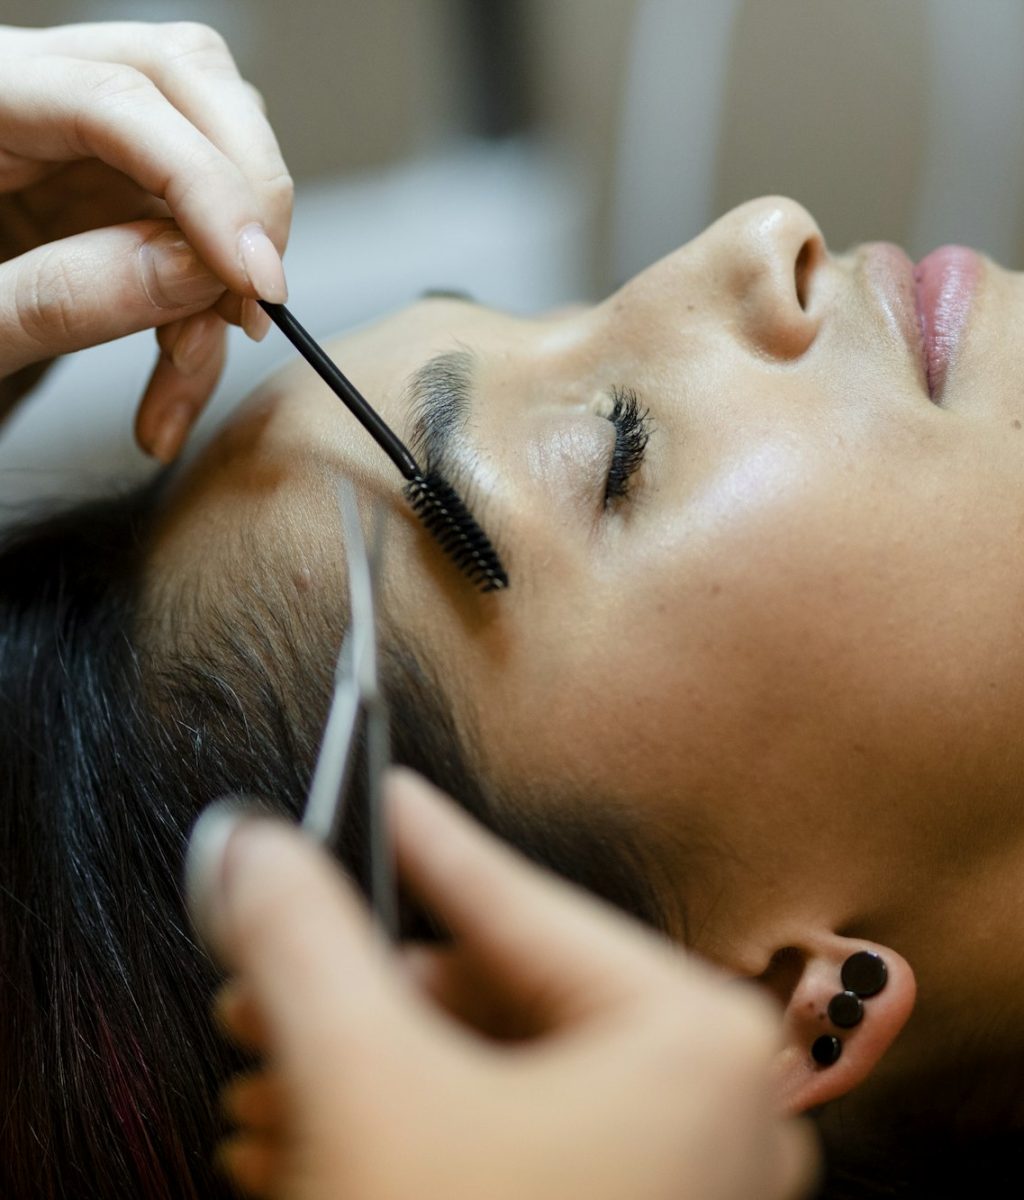 Customer getting eyebrow treatment at a beauty salon